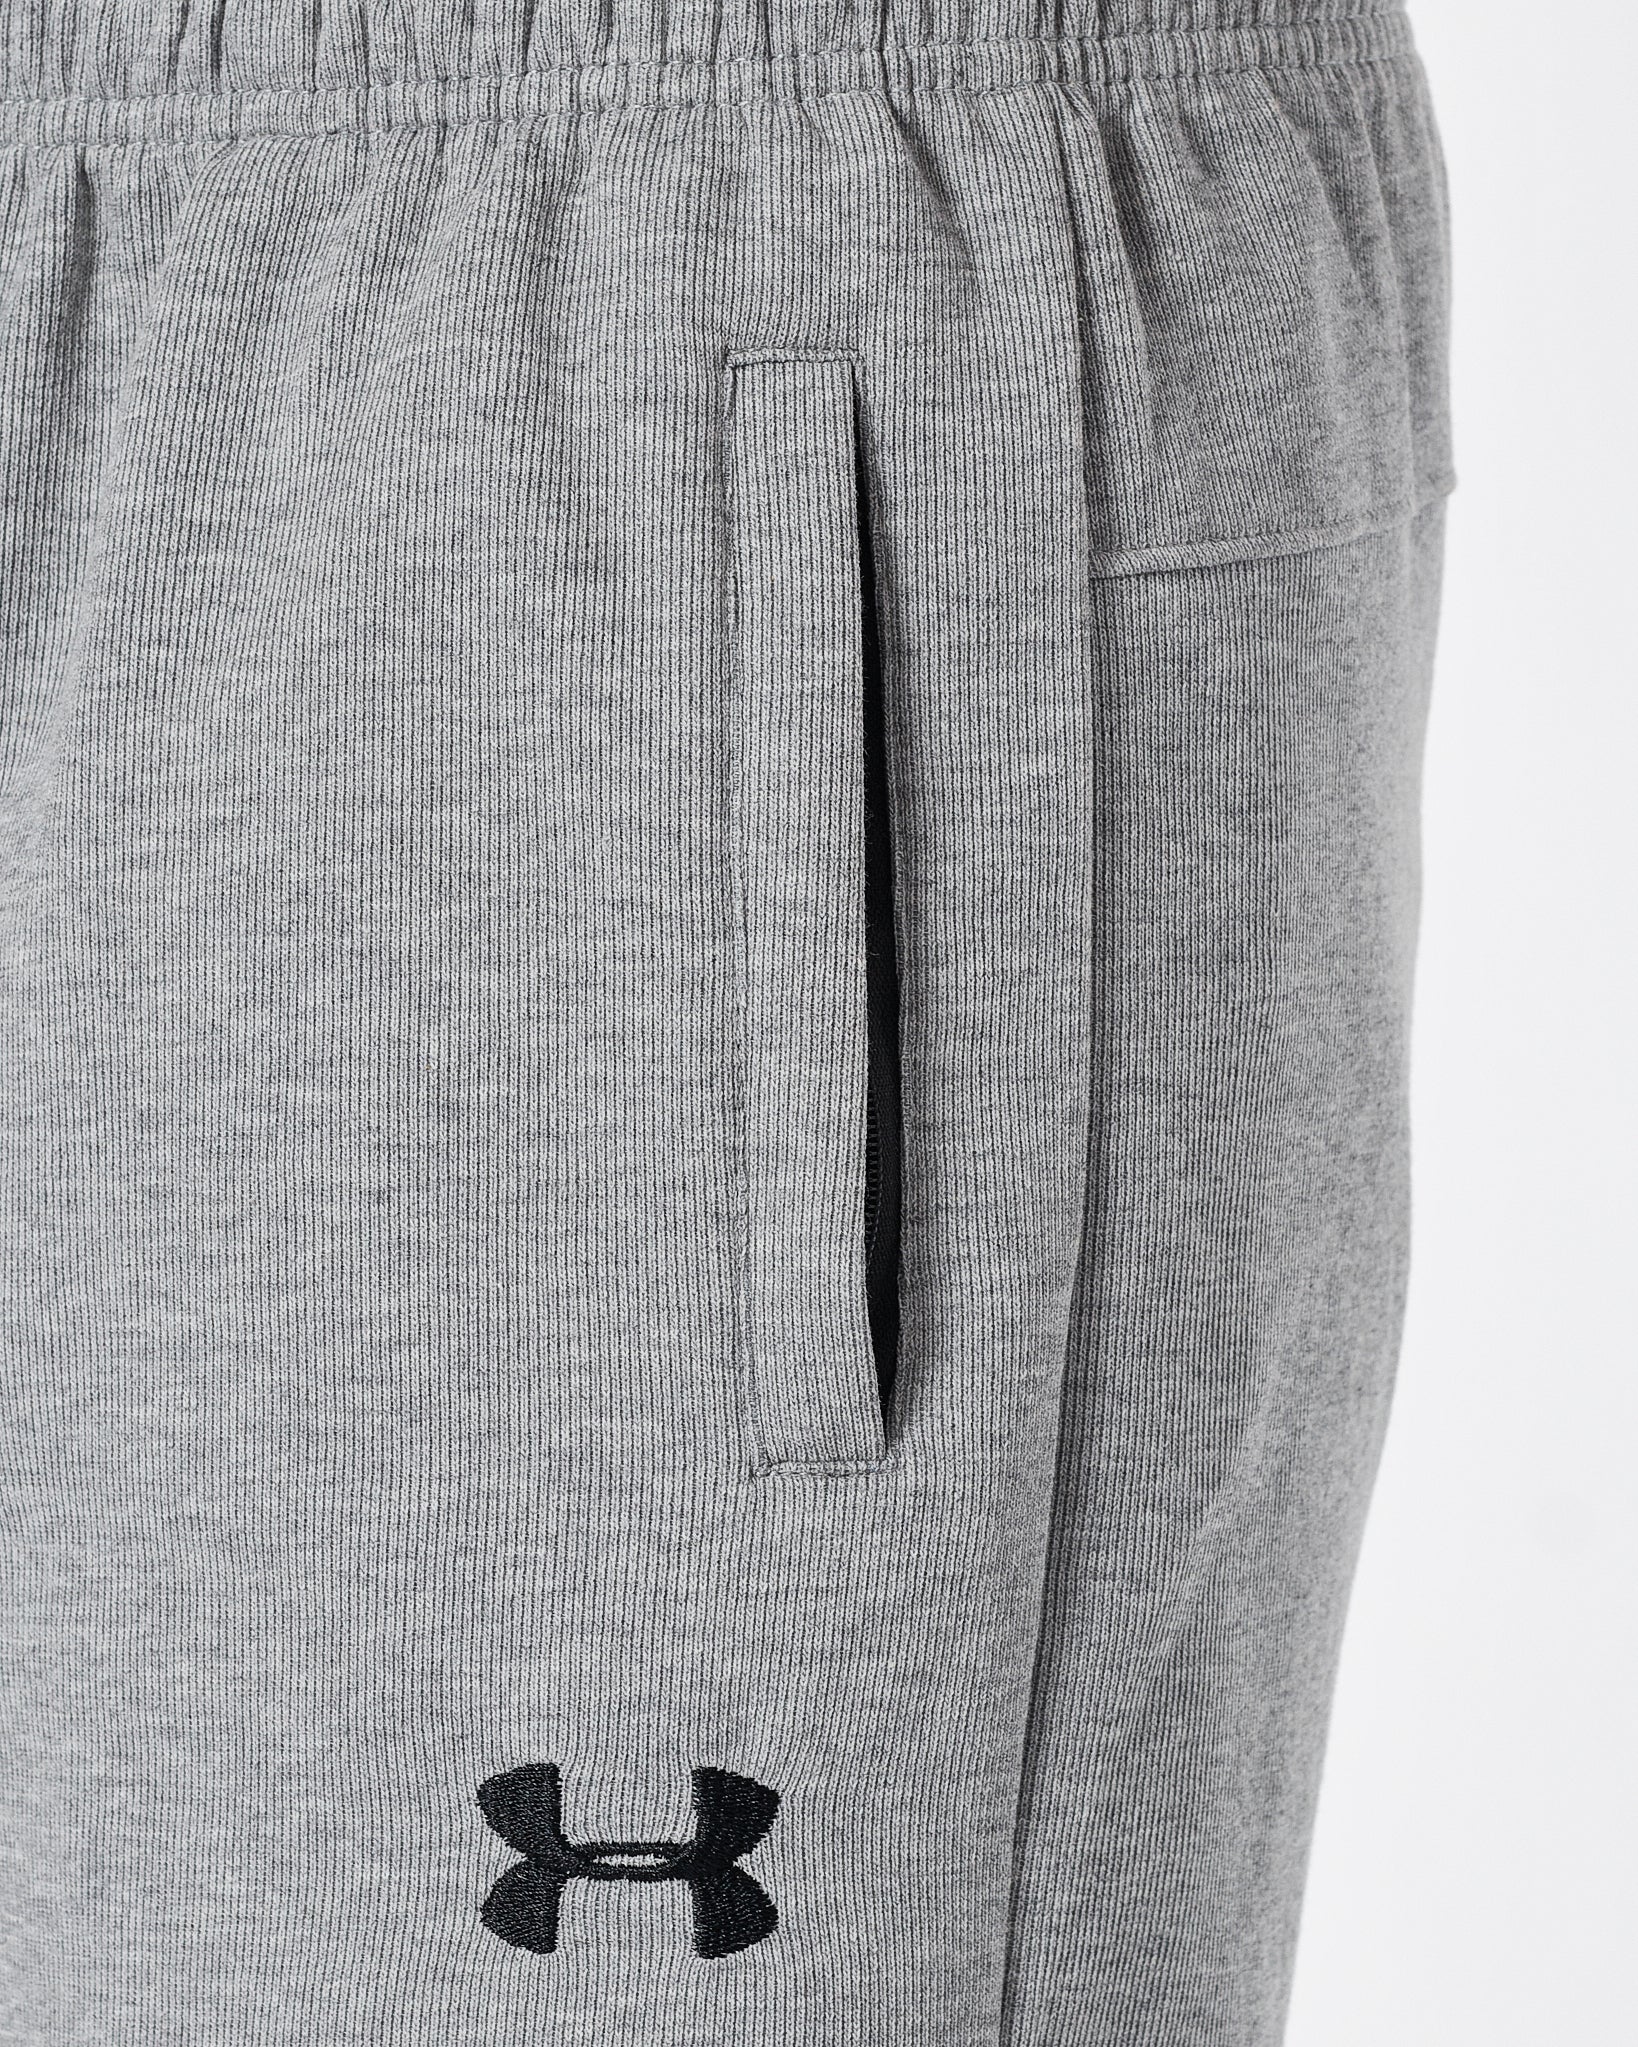 UA Logo Embroidered Men Grey Track Shorts 13.50